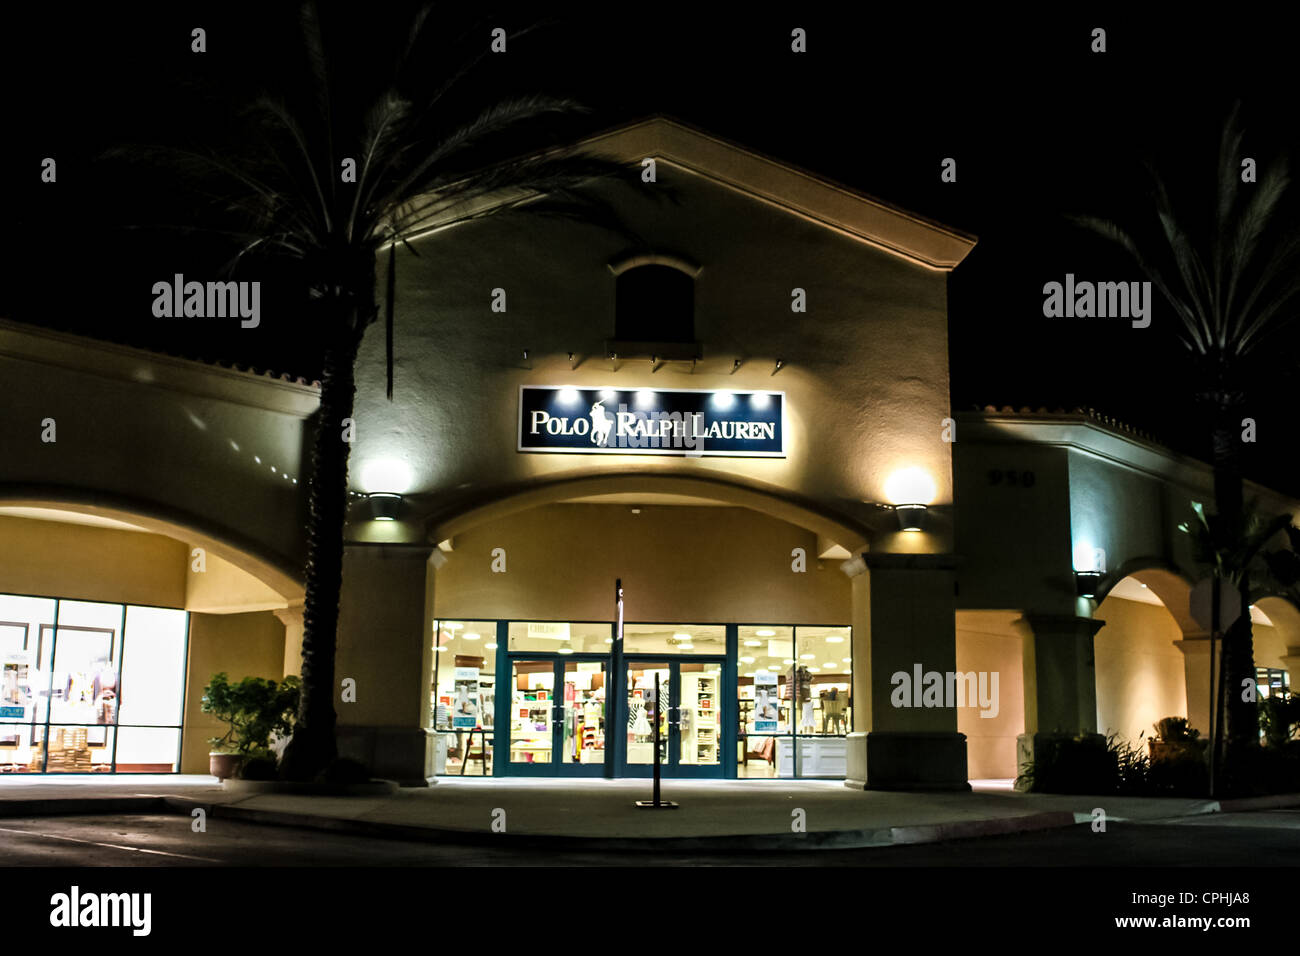 Ralph Lauren outlet store in Camarillo California Stock Photo: 48330752 - Alamy